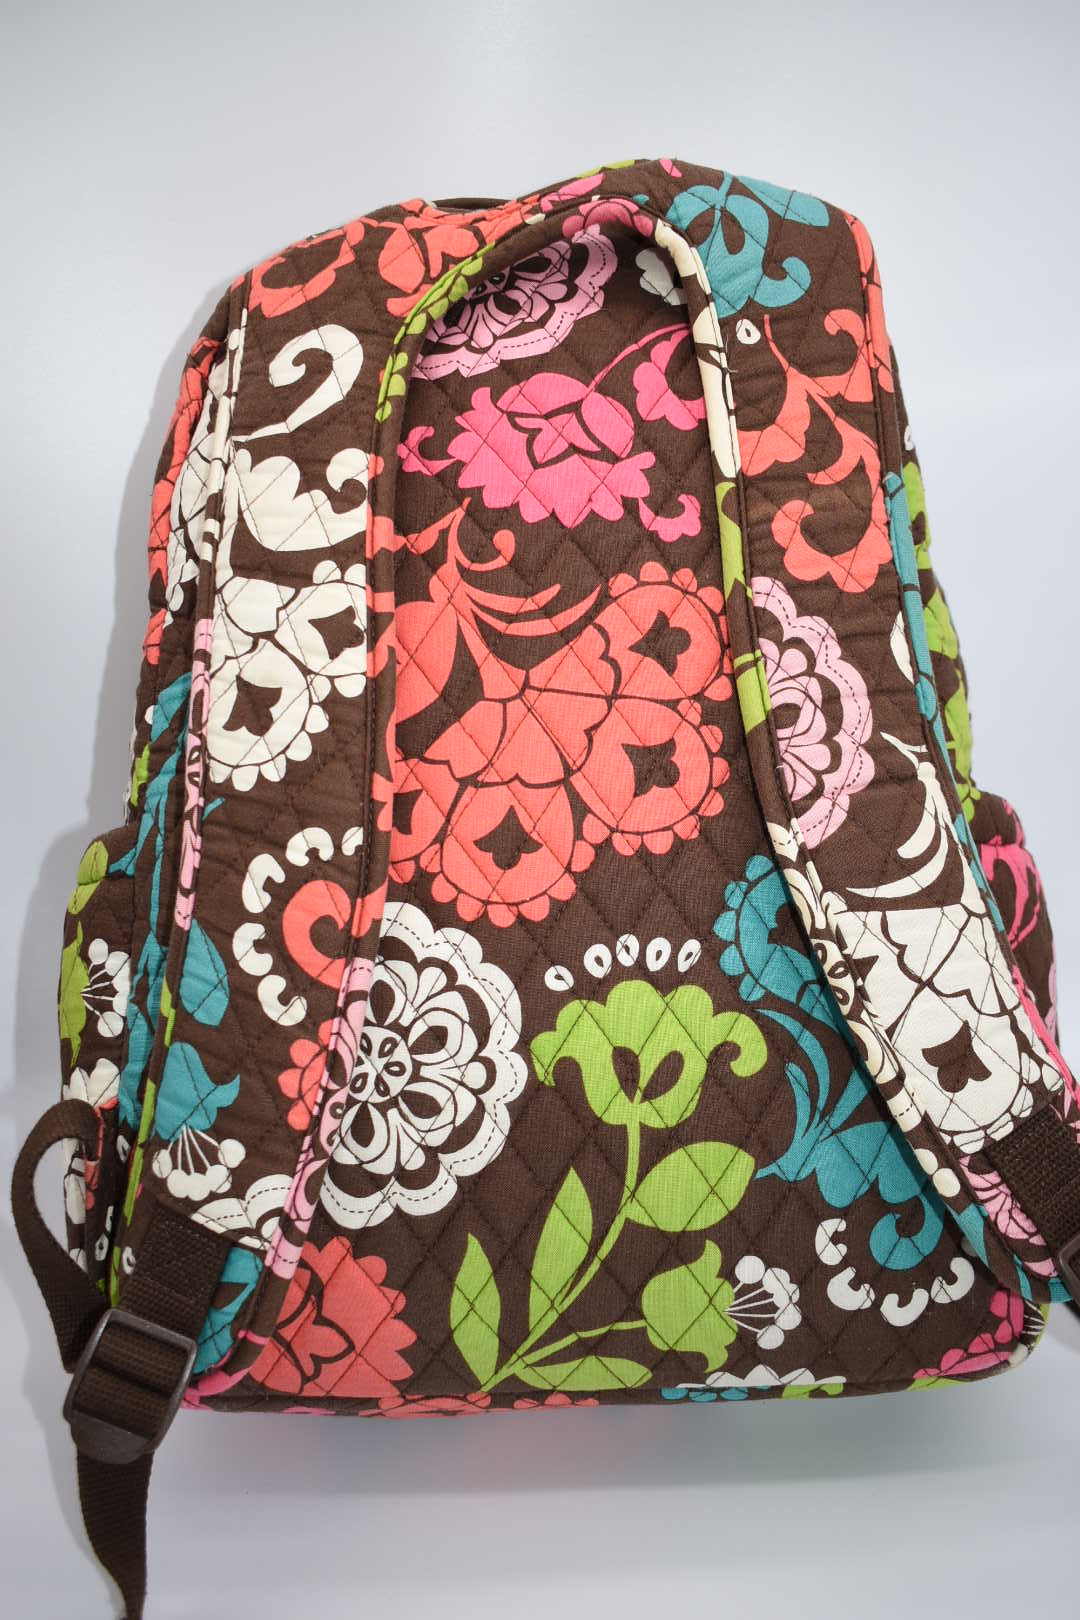 Vera Bradley backpack diaper bag - Backpacks | Facebook Marketplace |  Facebook